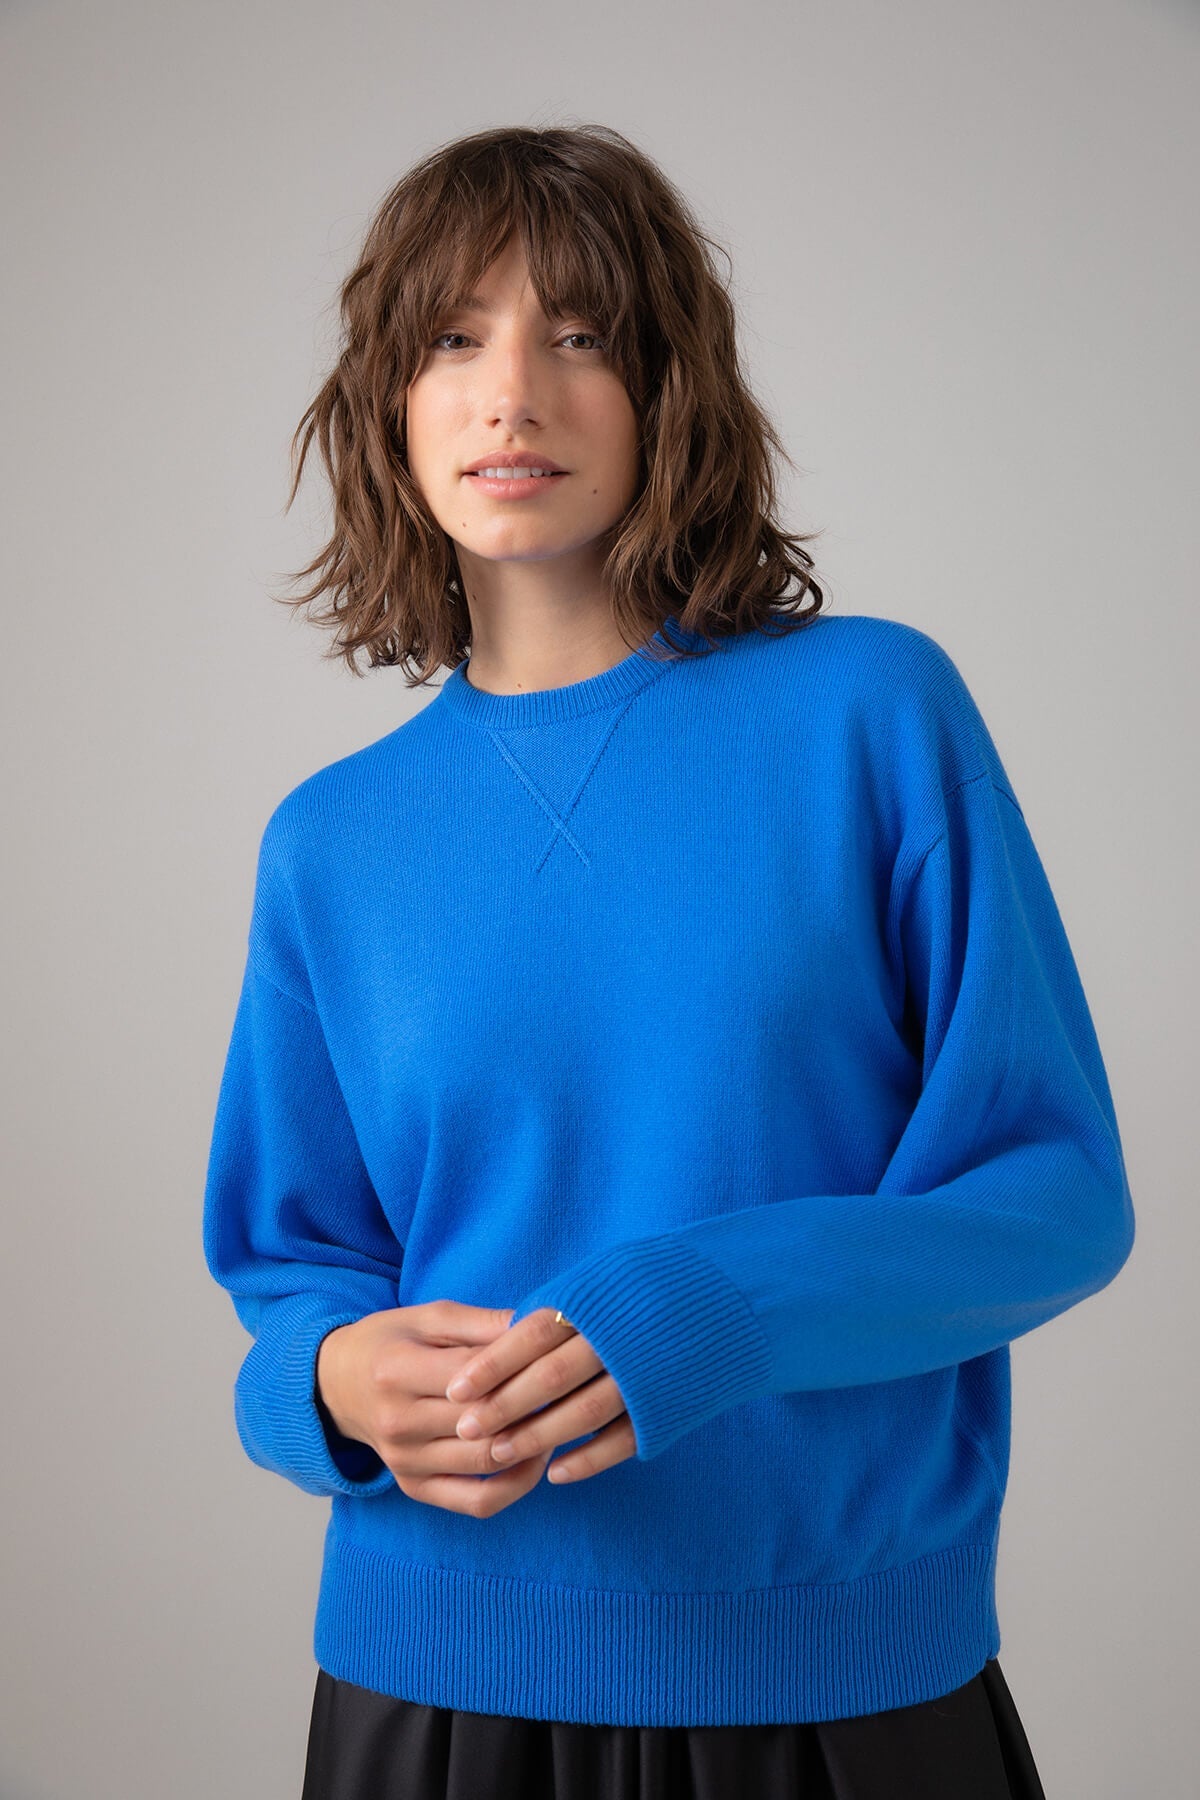 Johnstons of Elgin Women's Cashmere Girlfriend Style Sweatshirt in Orkney Blue on a grey background KAA05158SD4991